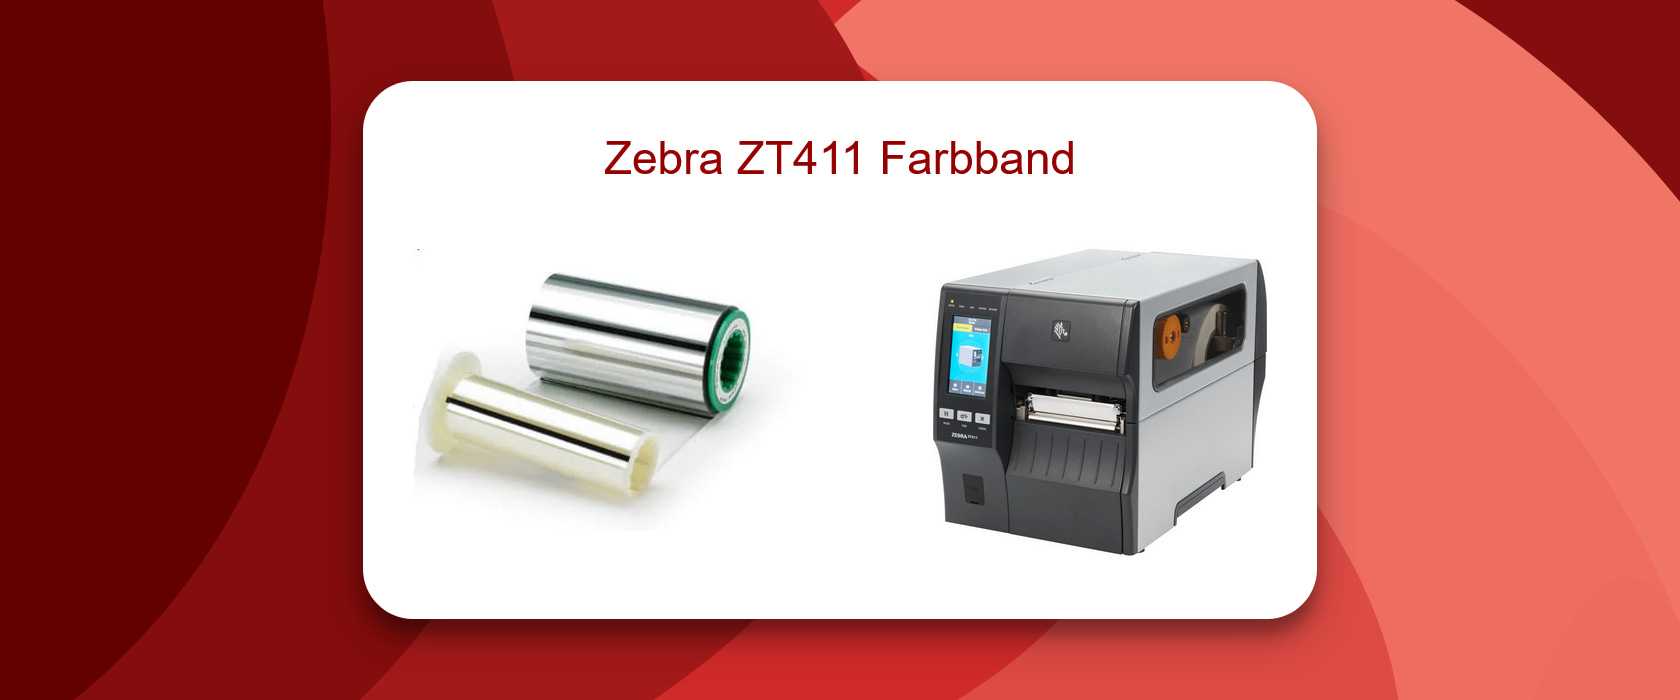 Zebra ZT411 Farbband